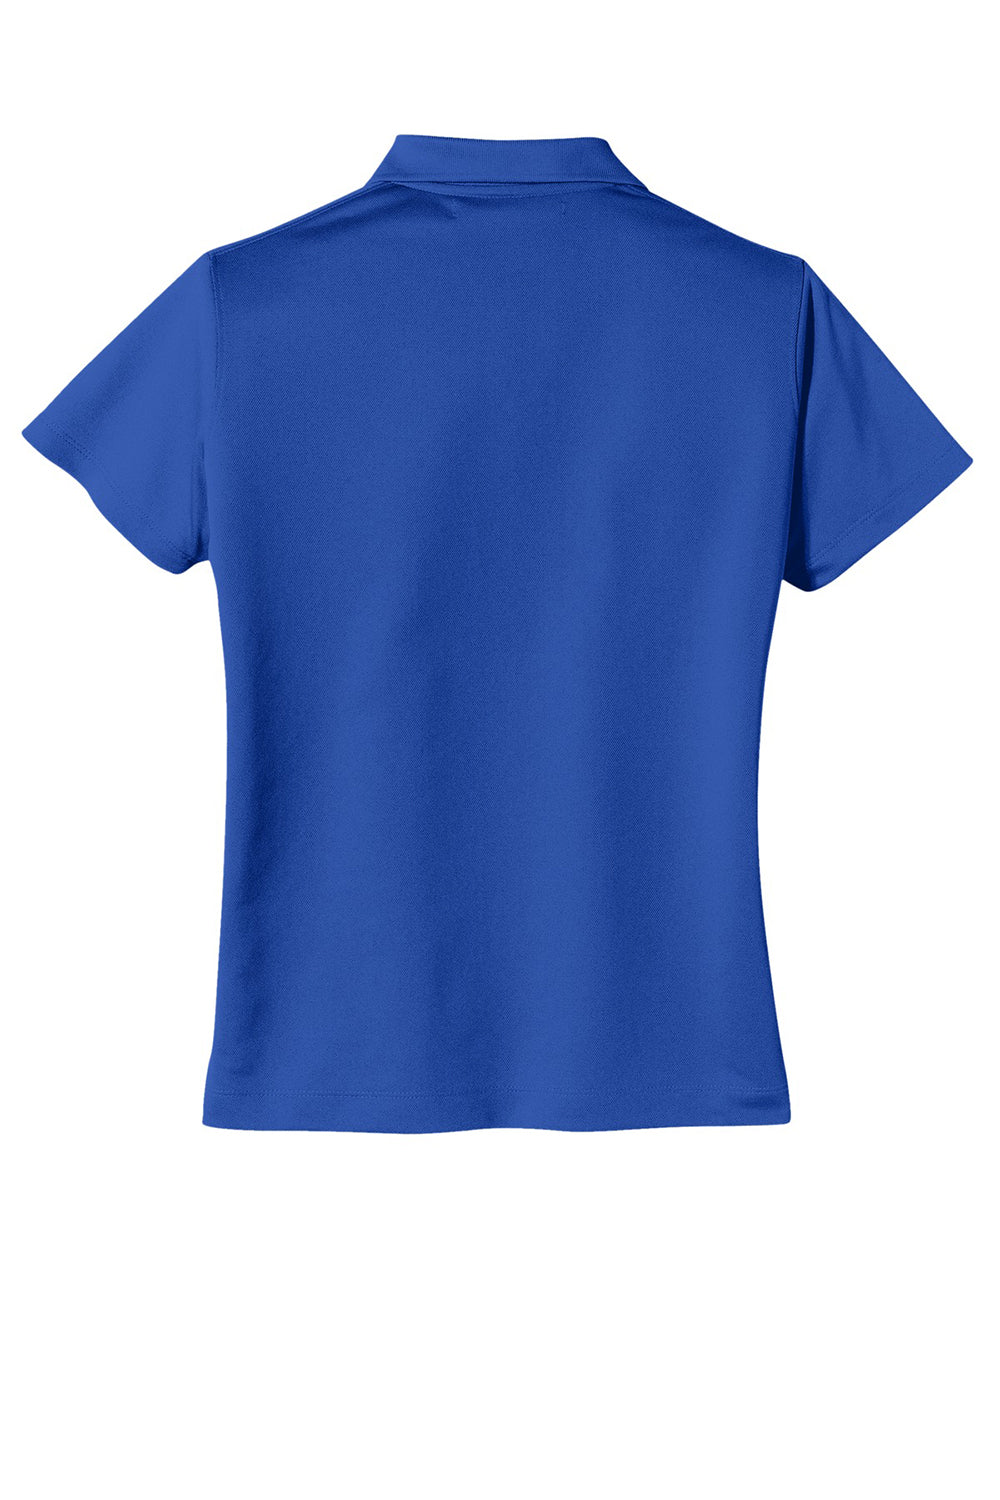 Nike 203697 Womens Tech Basic Dri-Fit Moisture Wicking Short Sleeve Polo Shirt Varsity Royal Blue Flat Back